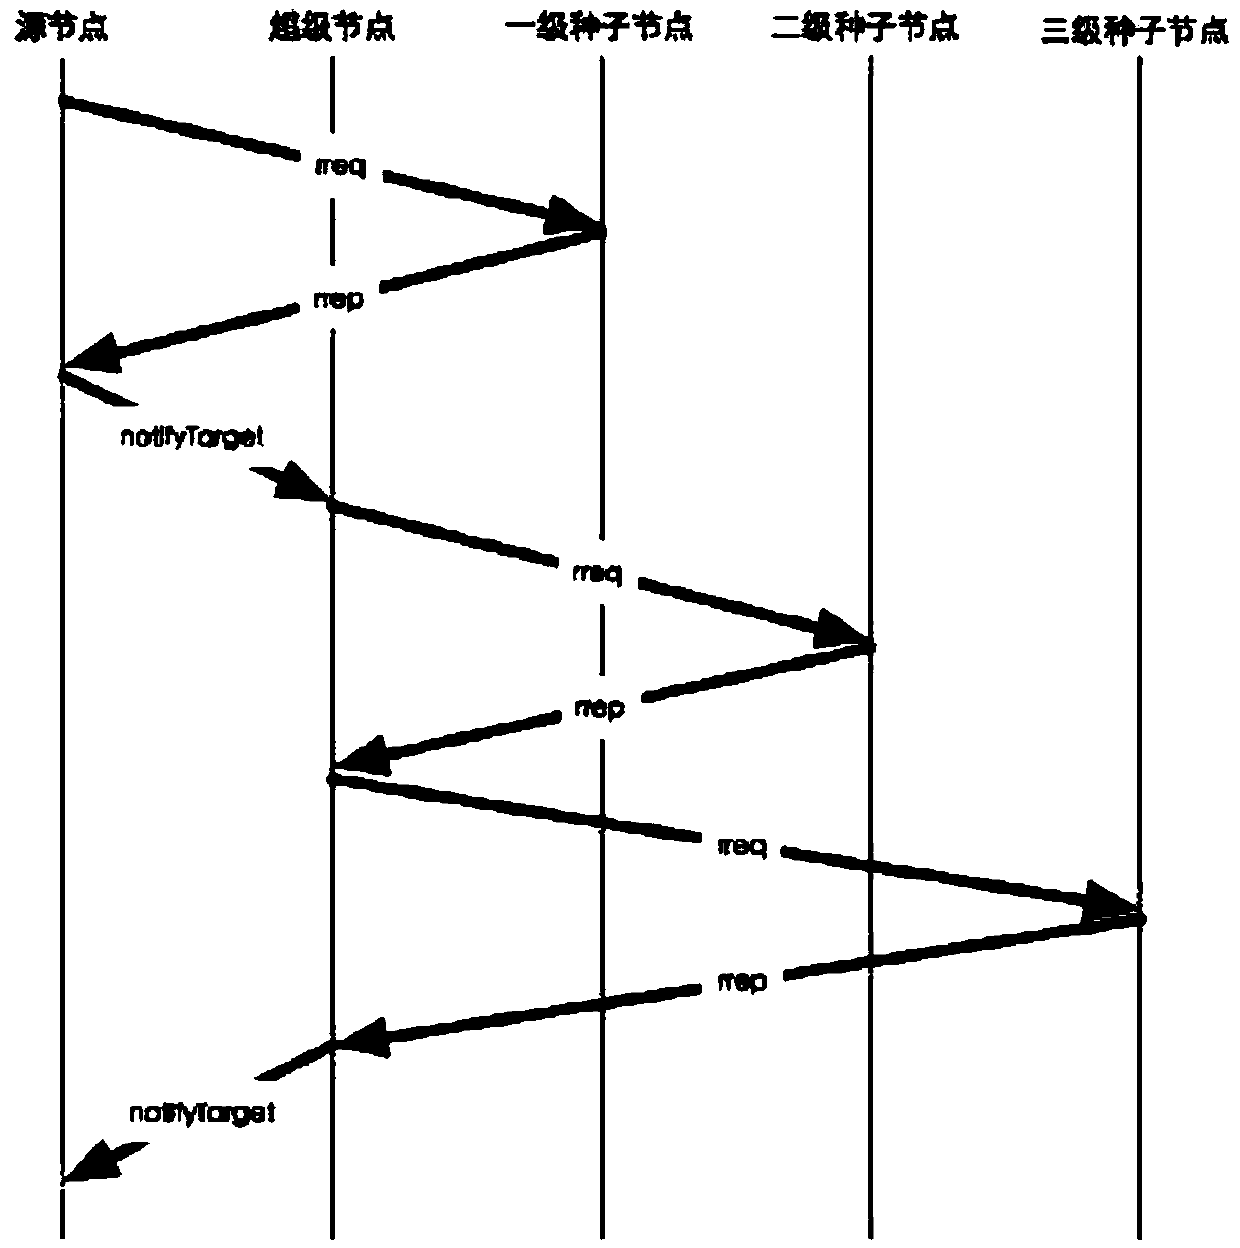 Wireless sensor network code distribution method based on multiple umbrella-shaped paths